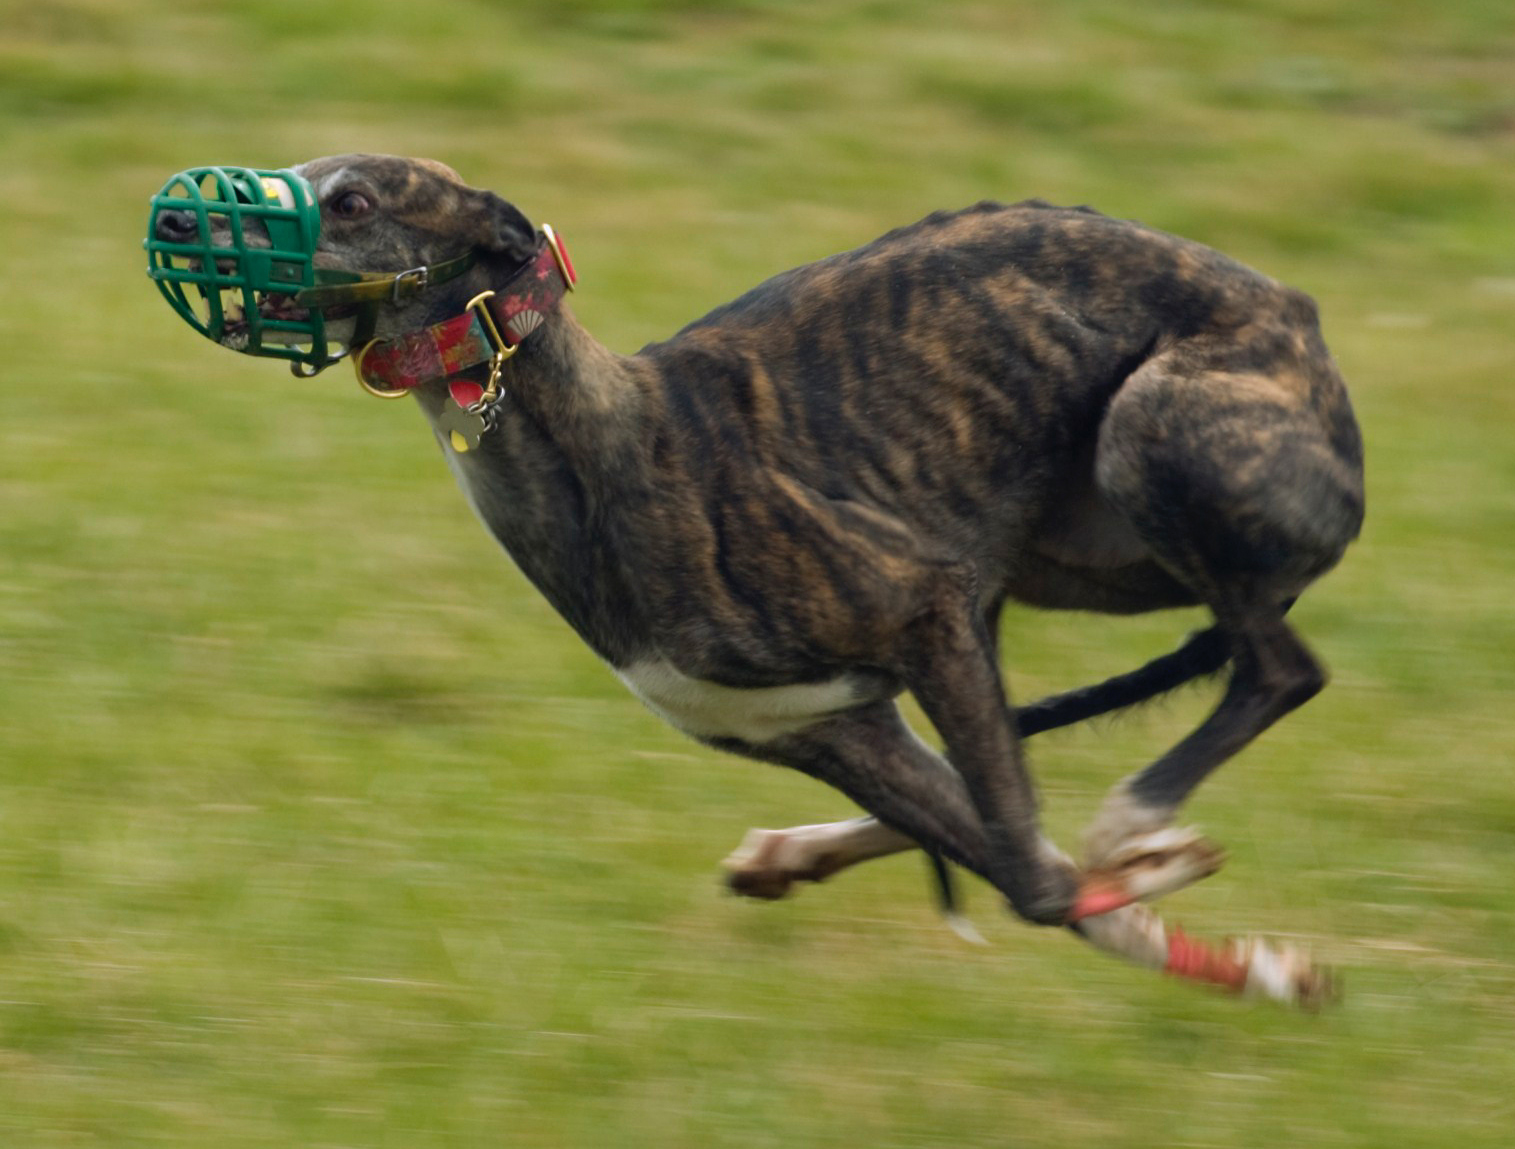 Photo: Greyhound Runs